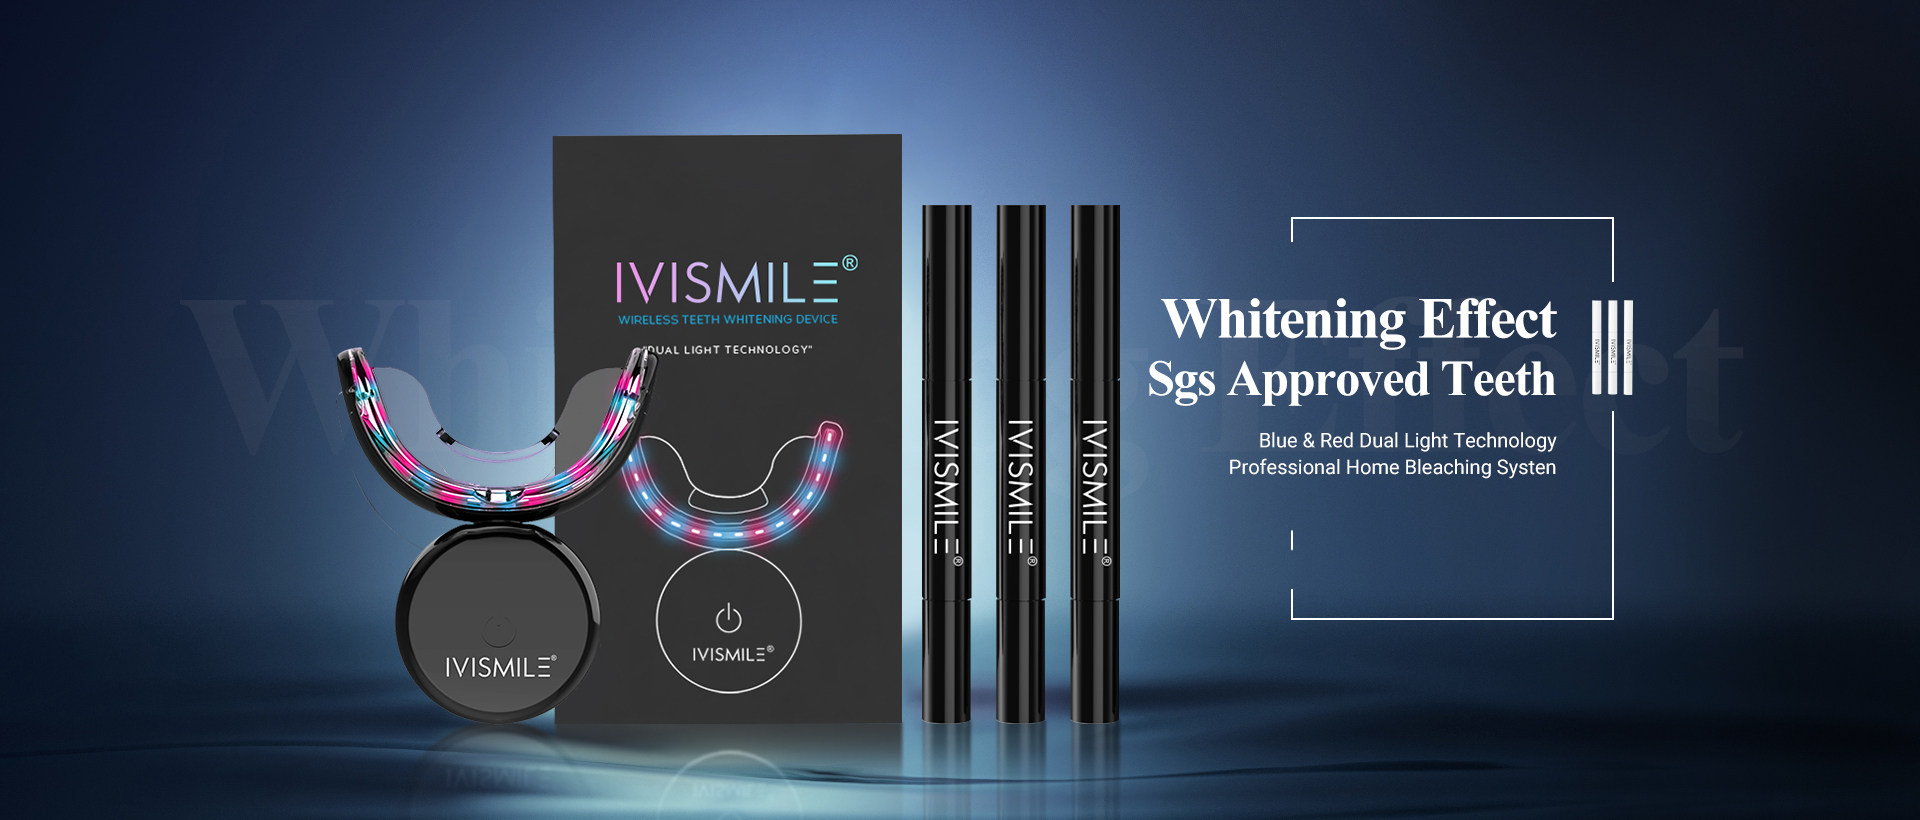 Led Teeth Whitening, Ivismile, Whitening Kit - IVISMILE